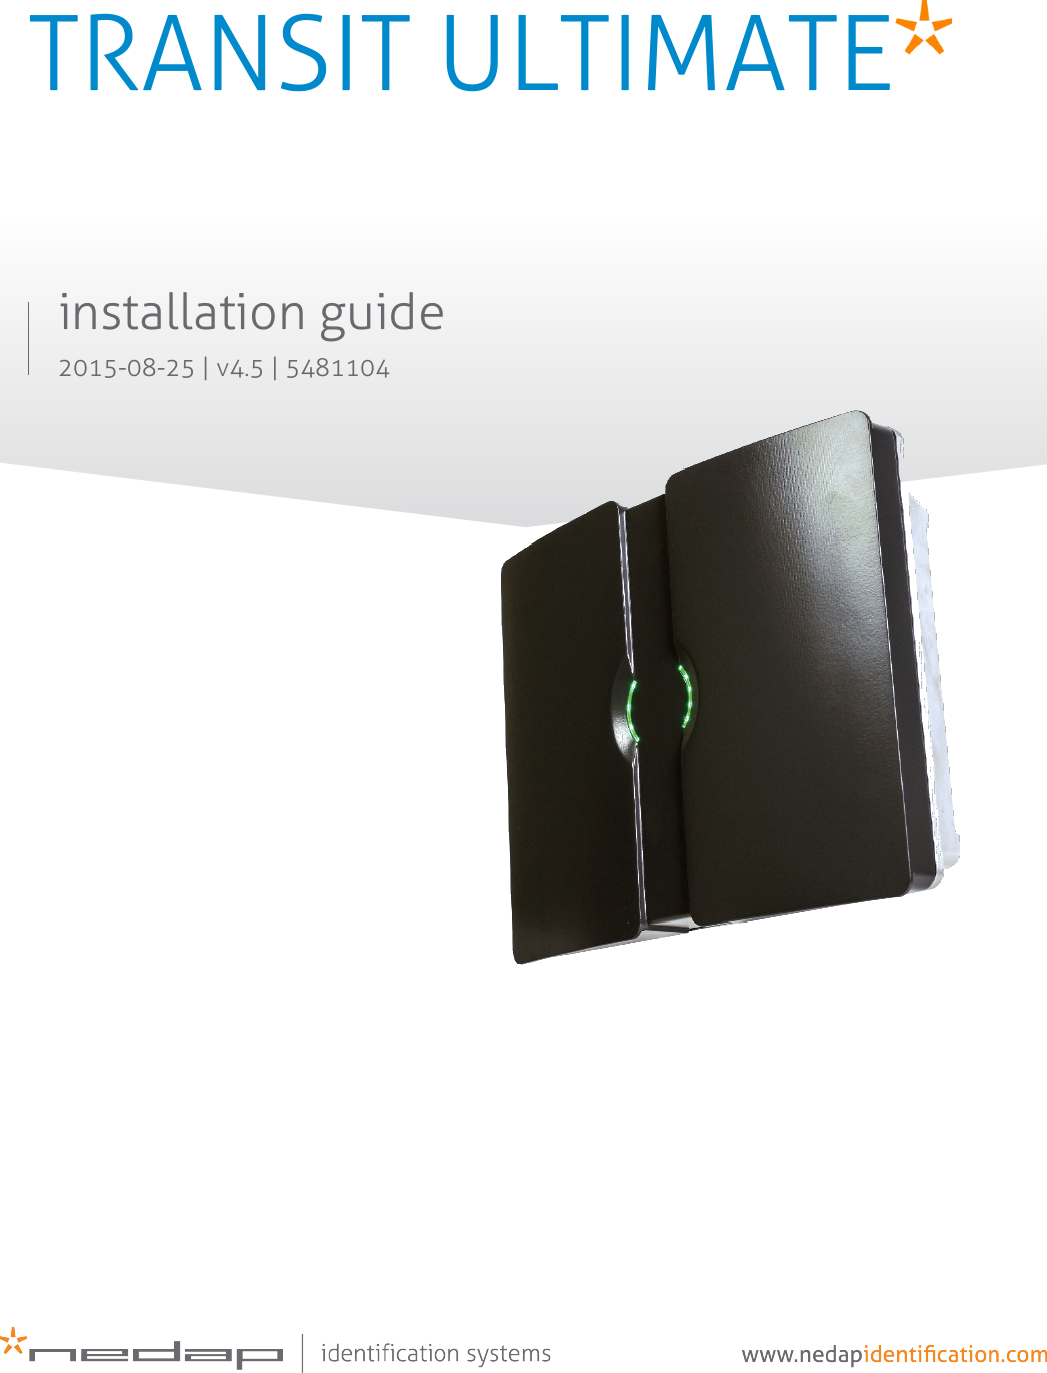       TRANSIT ULTIMATE    installation guide  2015-08-25 | v4.5 | 5481104     